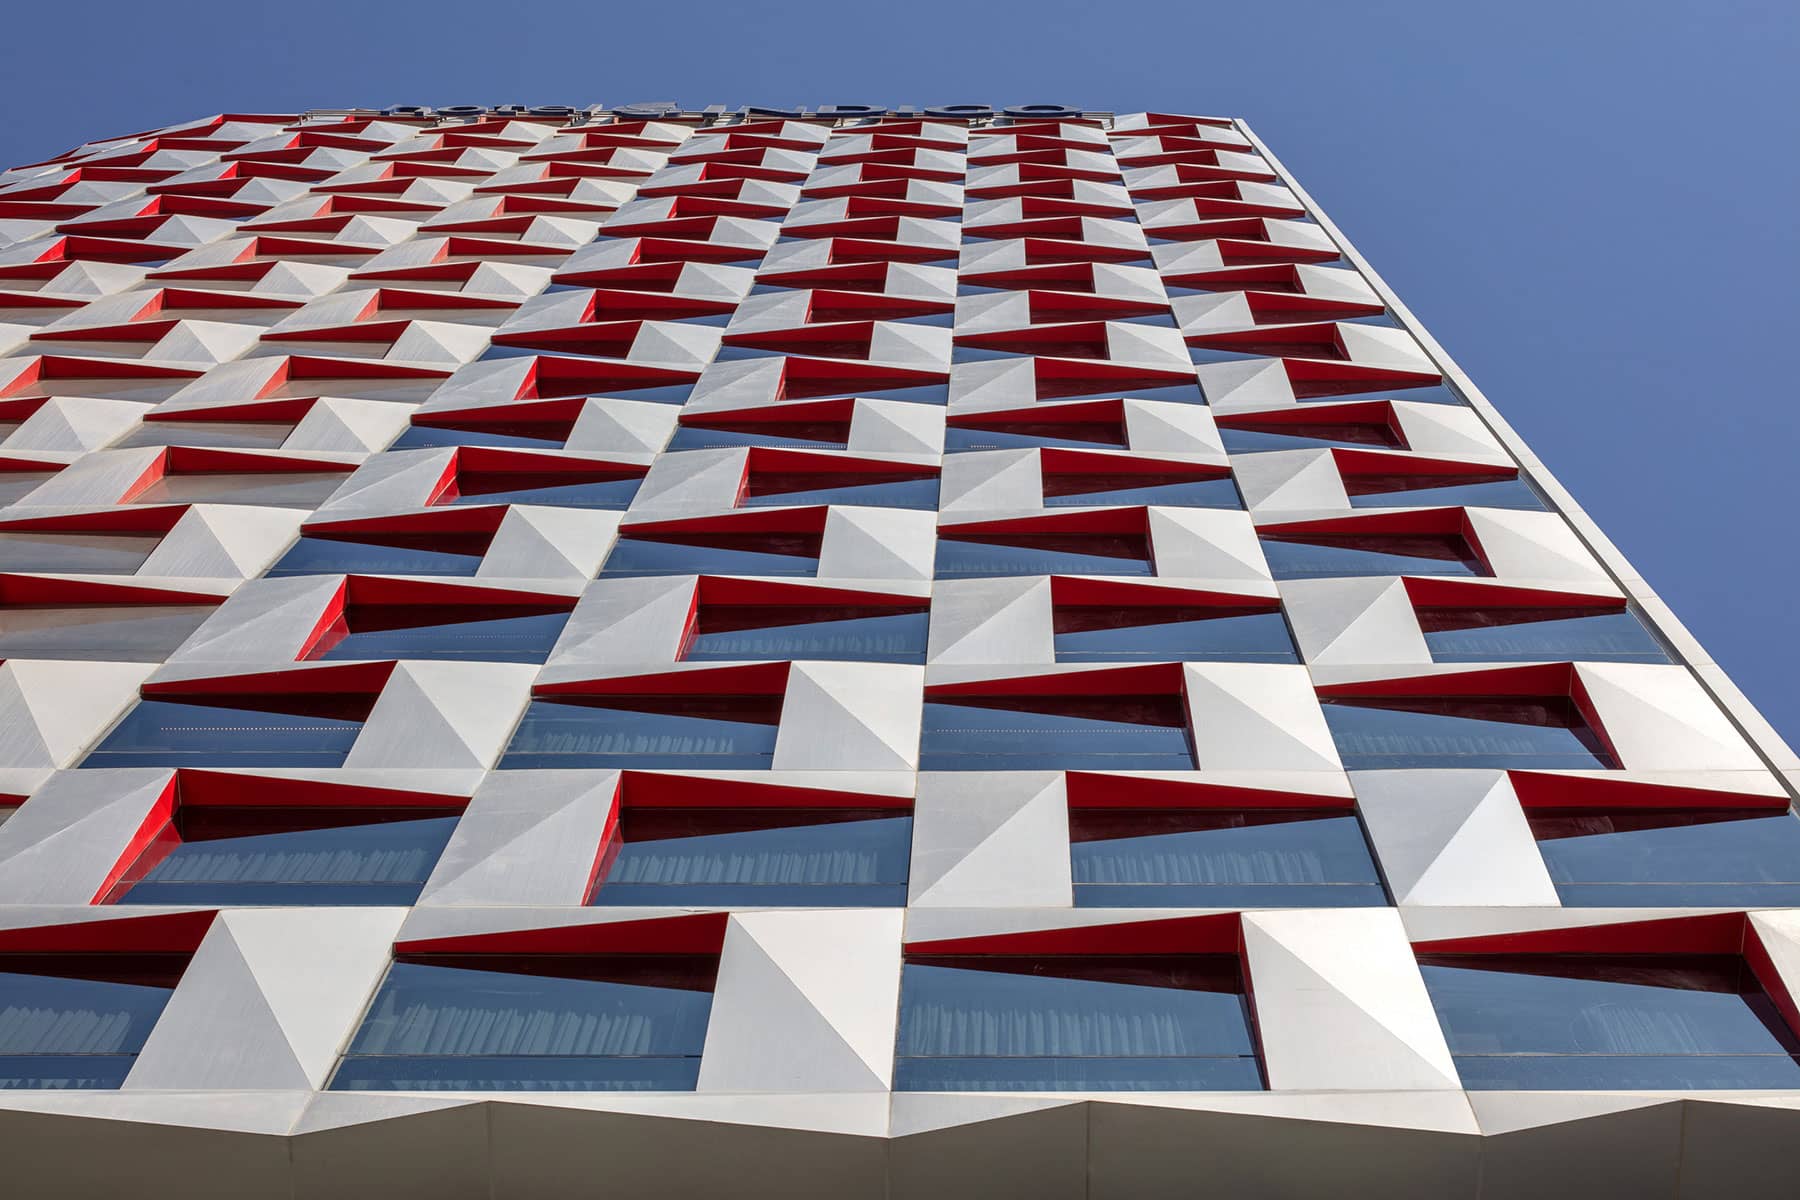 Architecture Photography Dubai: Abstract of façade and window pattern at Indigo Hotel Dubai, UAE.